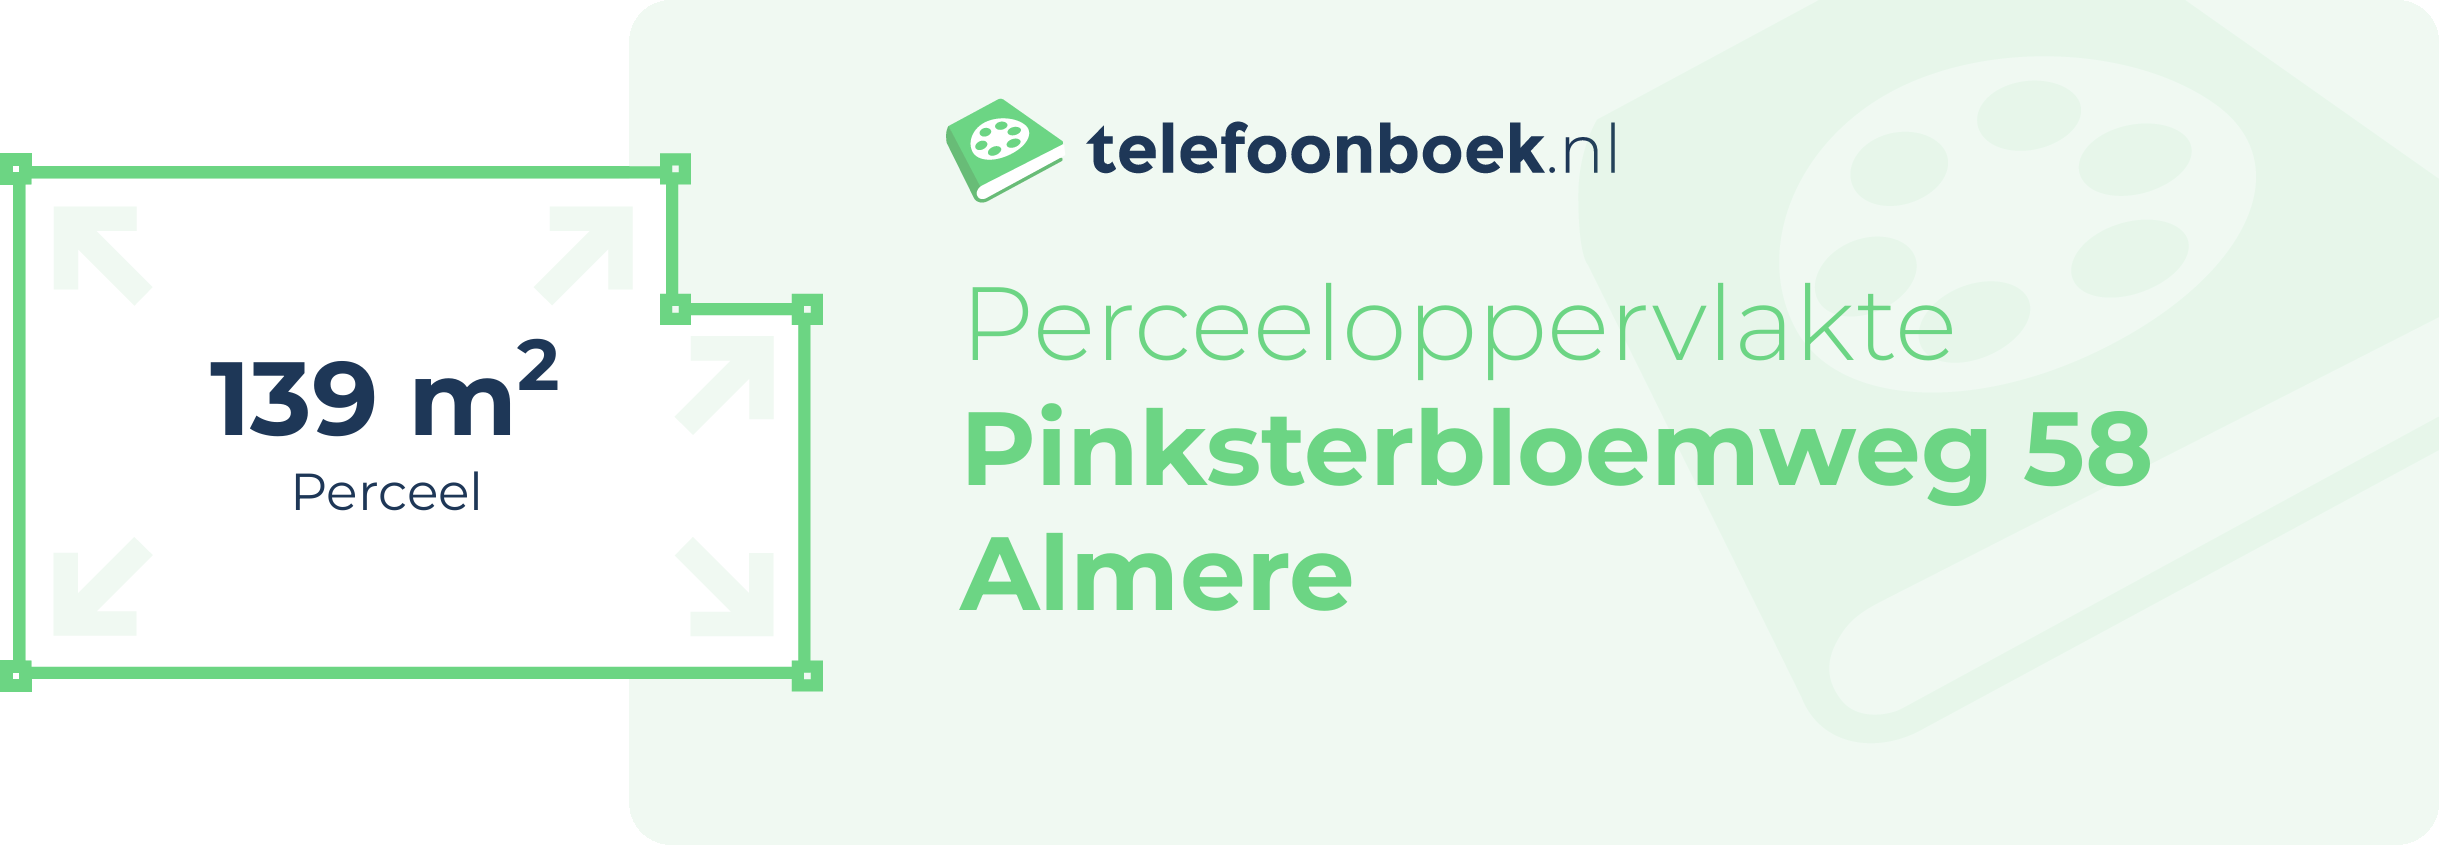 Perceeloppervlakte Pinksterbloemweg 58 Almere